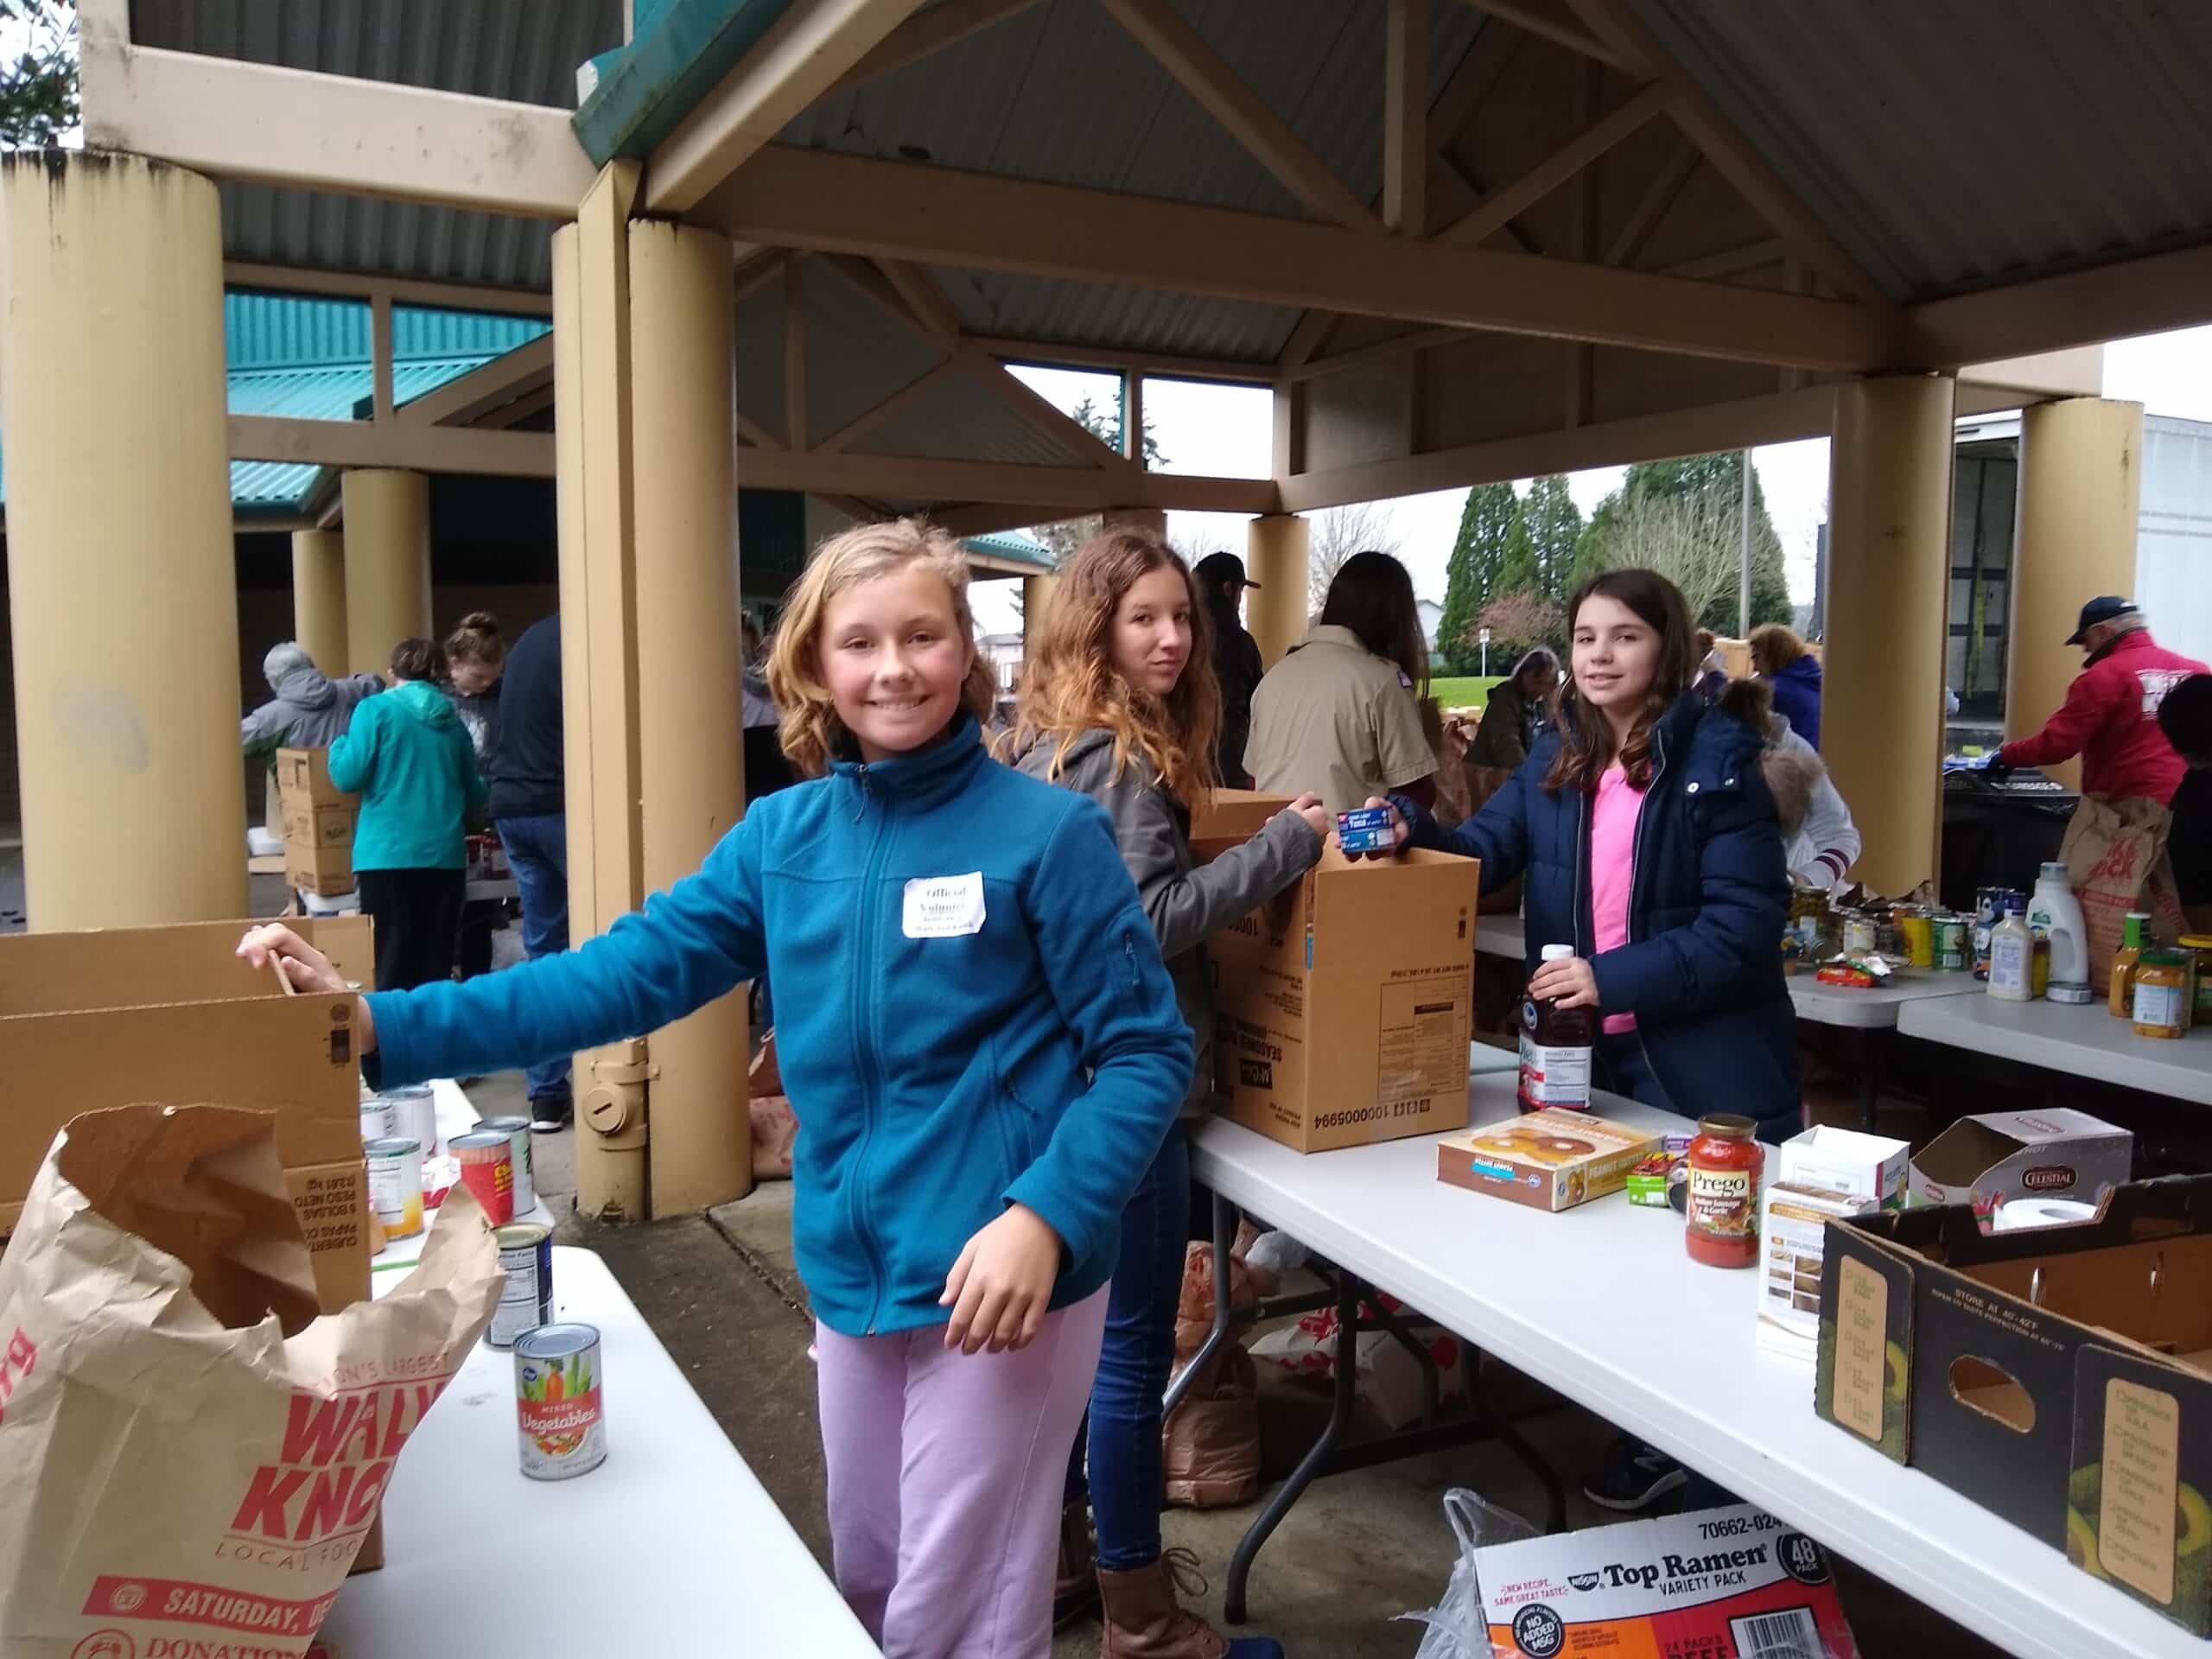 Tween girls help sort non-perishable food items under a pavilion